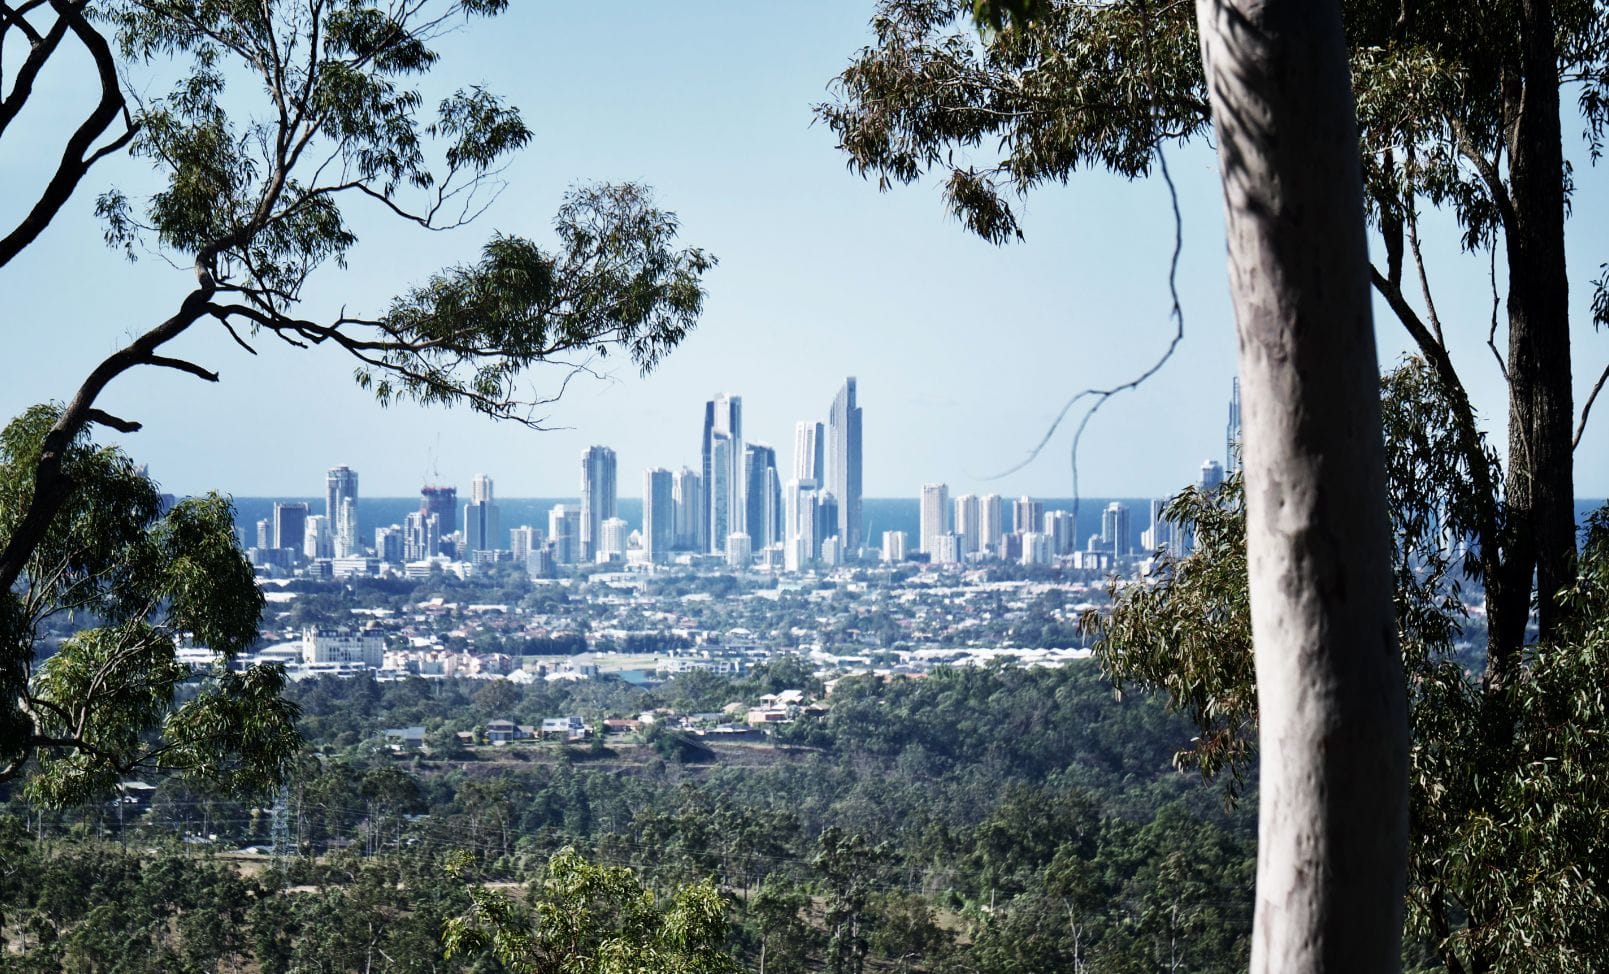 Perron Group kicks off $1.5 billion mini city to tackle Gold Coast housing shortage